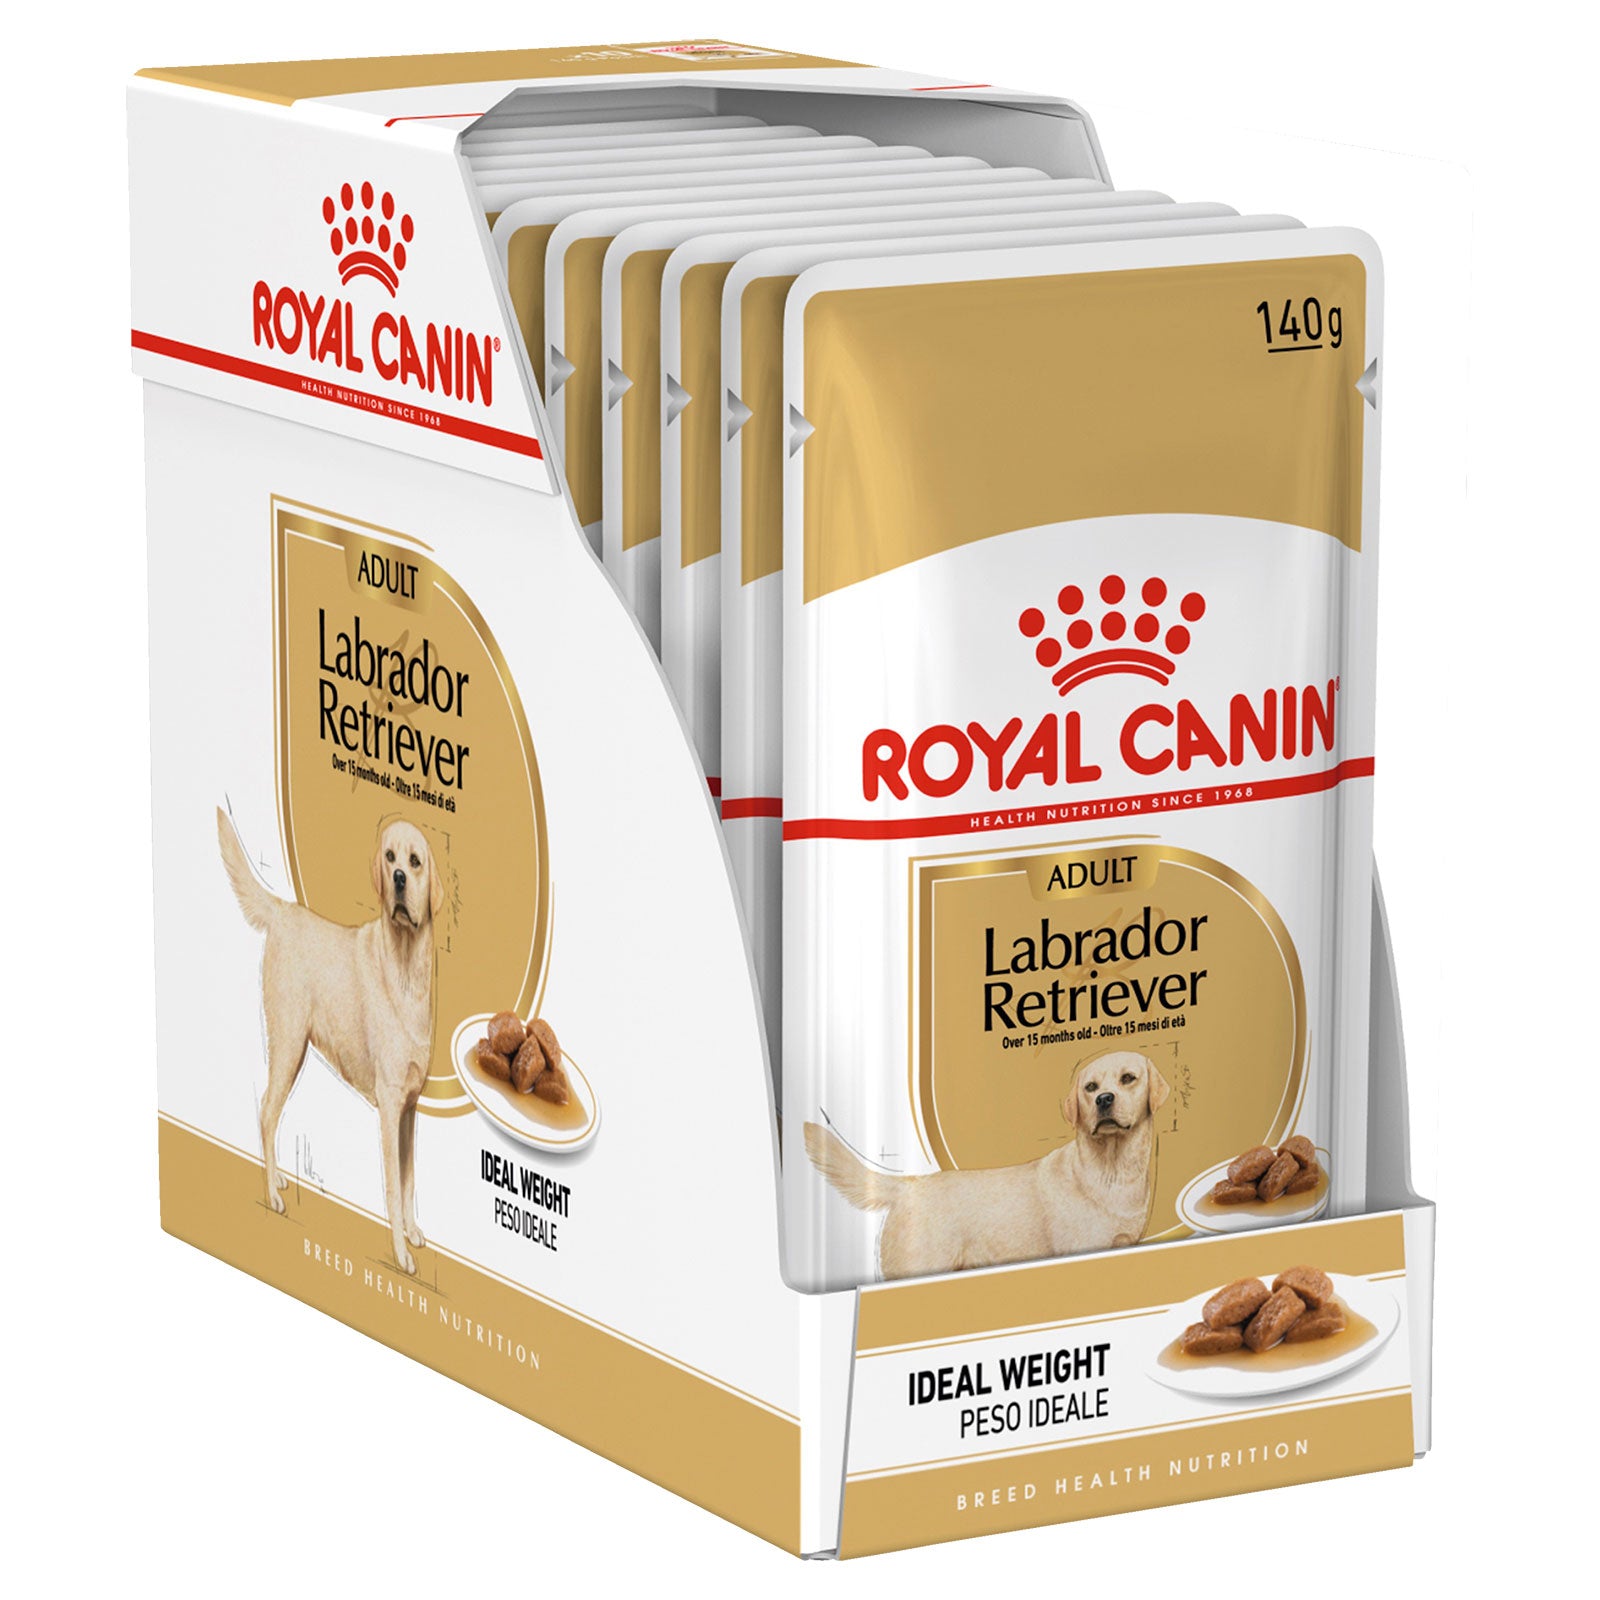 Royal Canin Dog Food Pouch Adult Labrador